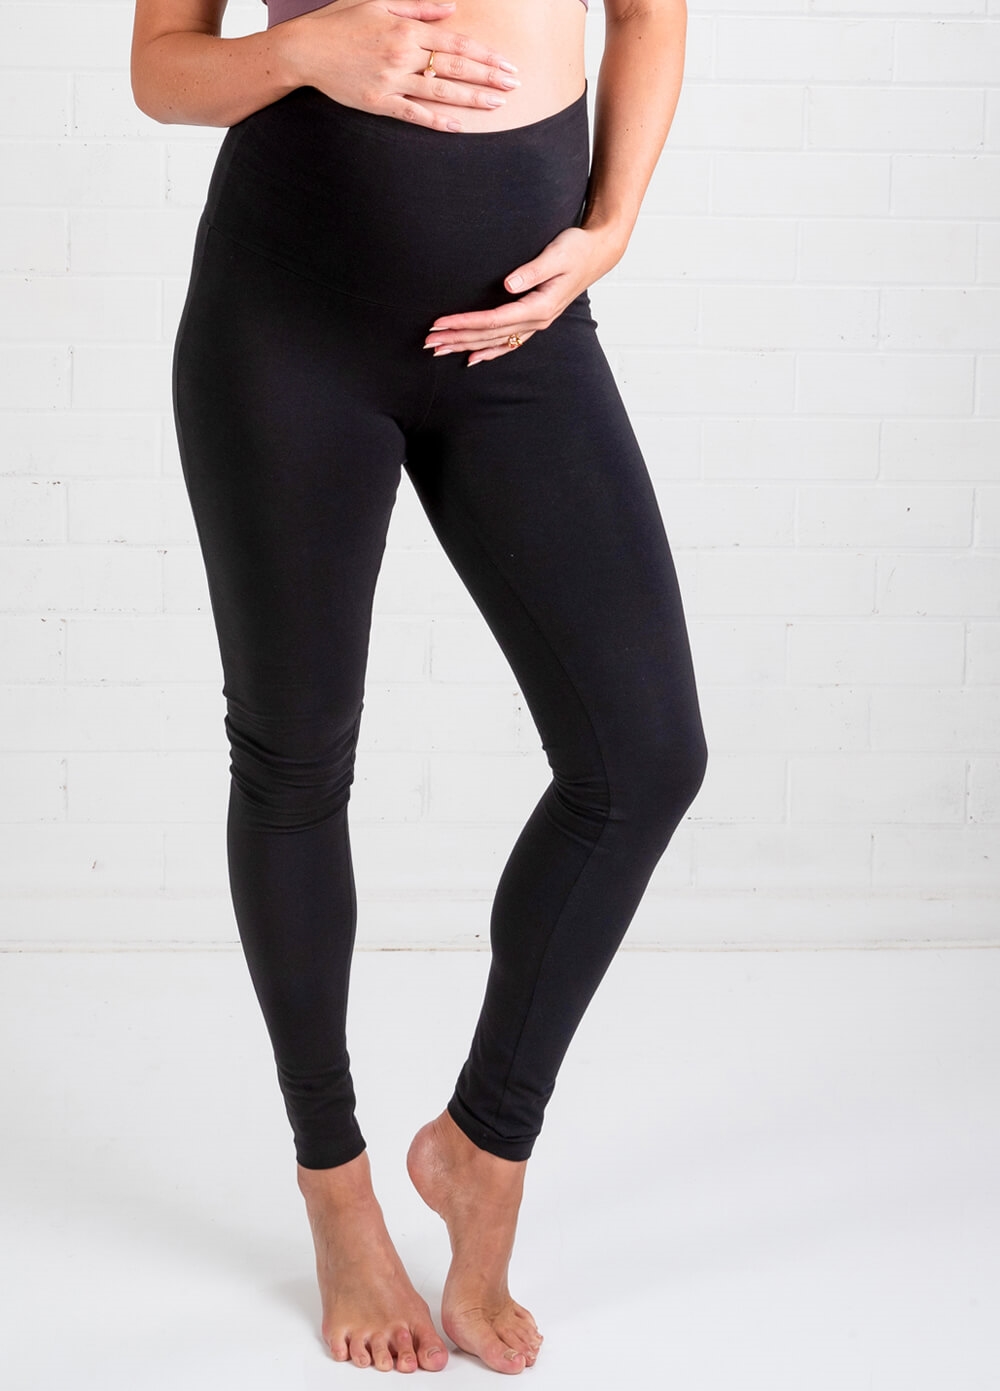 Lorna Jane - Maternity Leggings And Bra Set on Designer Wardrobe